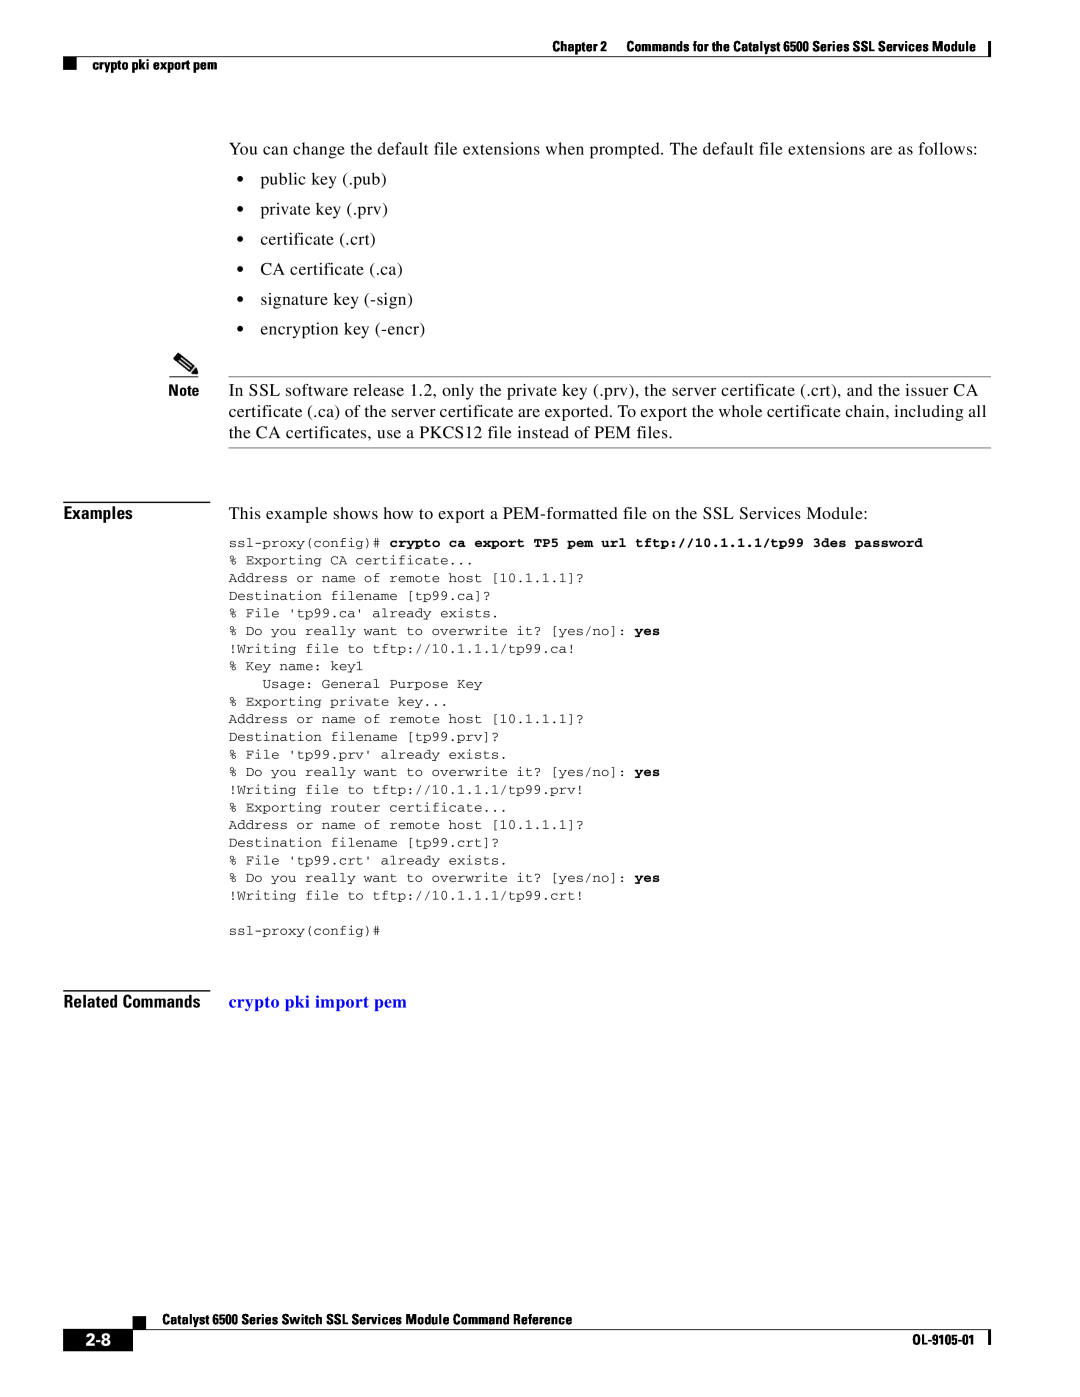 Cisco Systems 6500 manual Examples, crypto pki import pem 